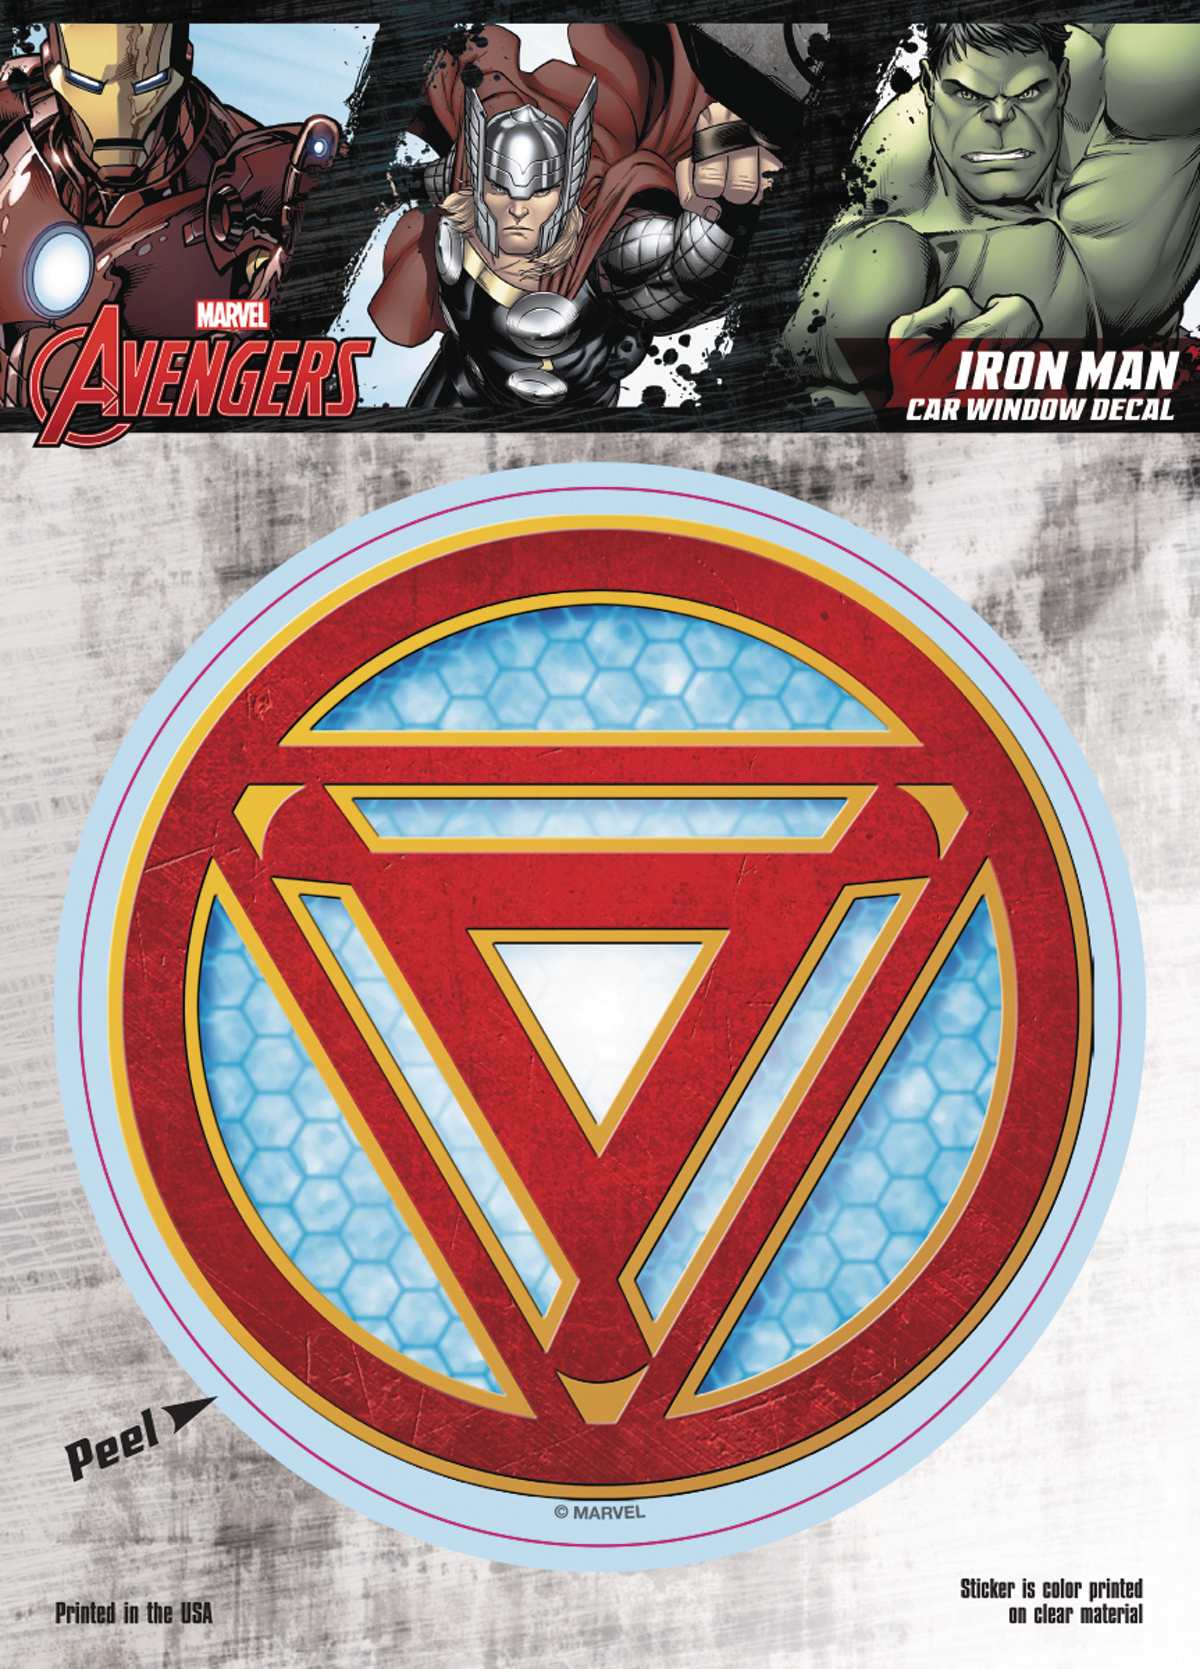 jul168679 marvel avengers iron man reactor logo vinyl decal previews world